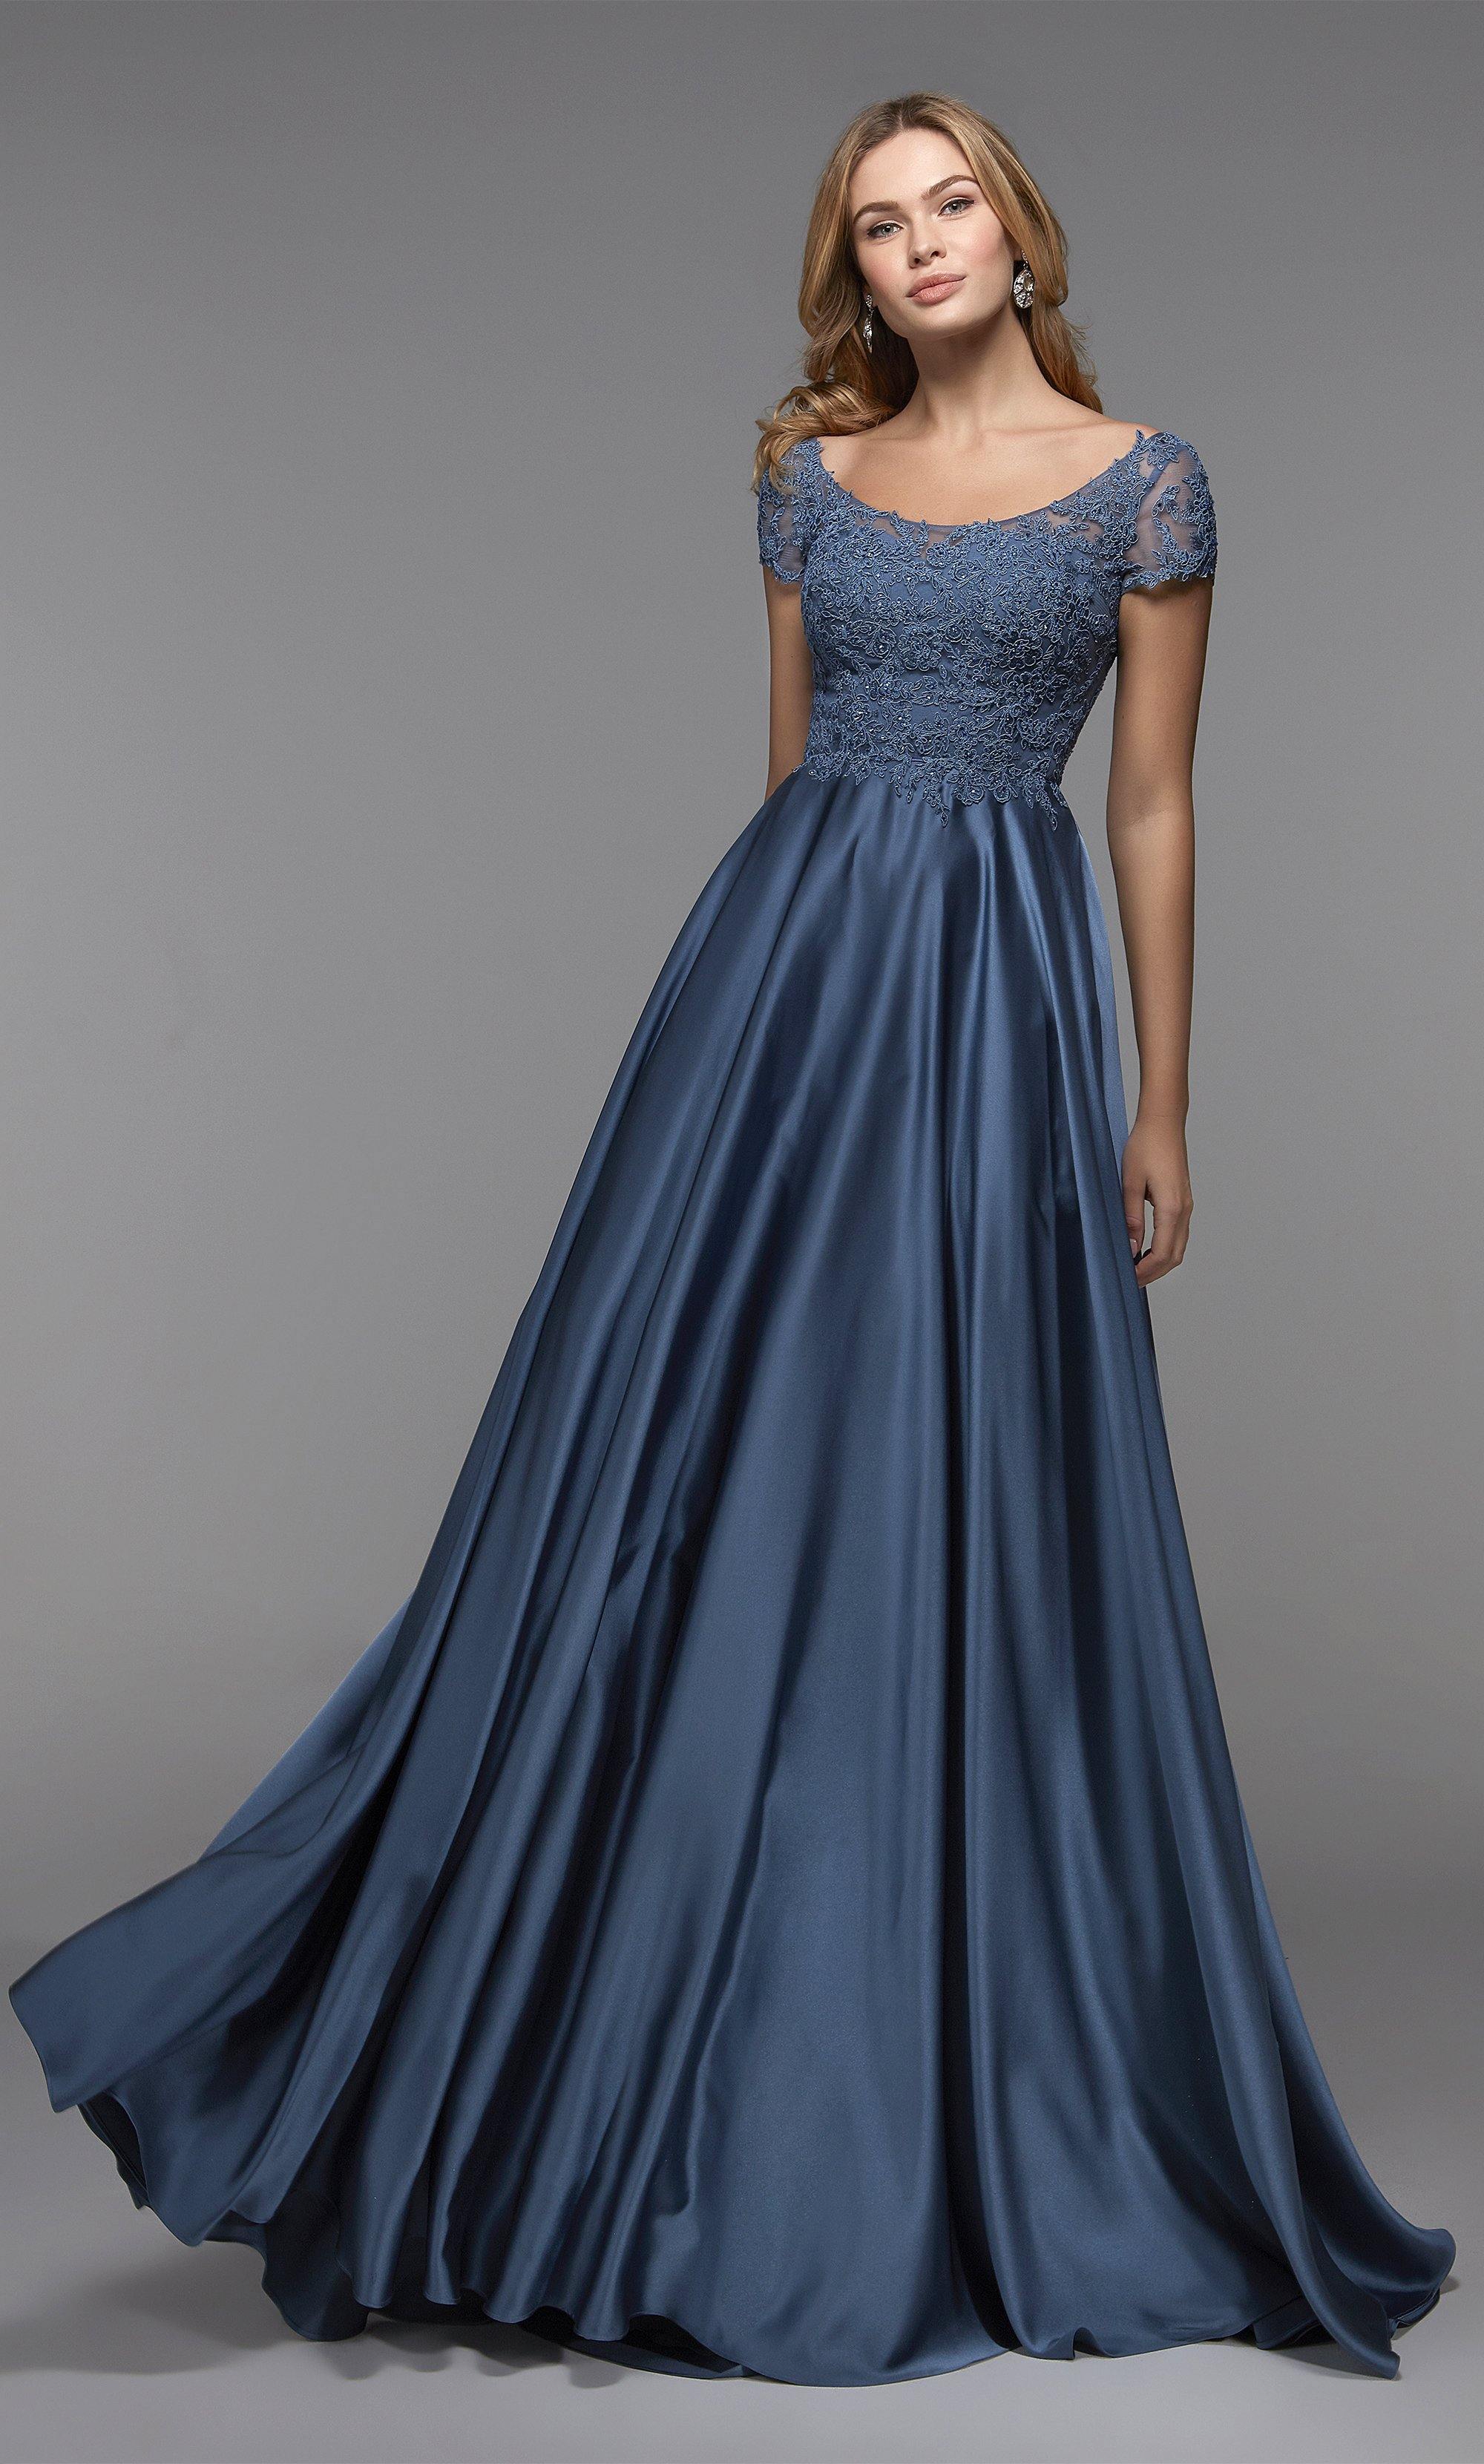 Formal Dresses, Evening Gowns & Evening Dresses